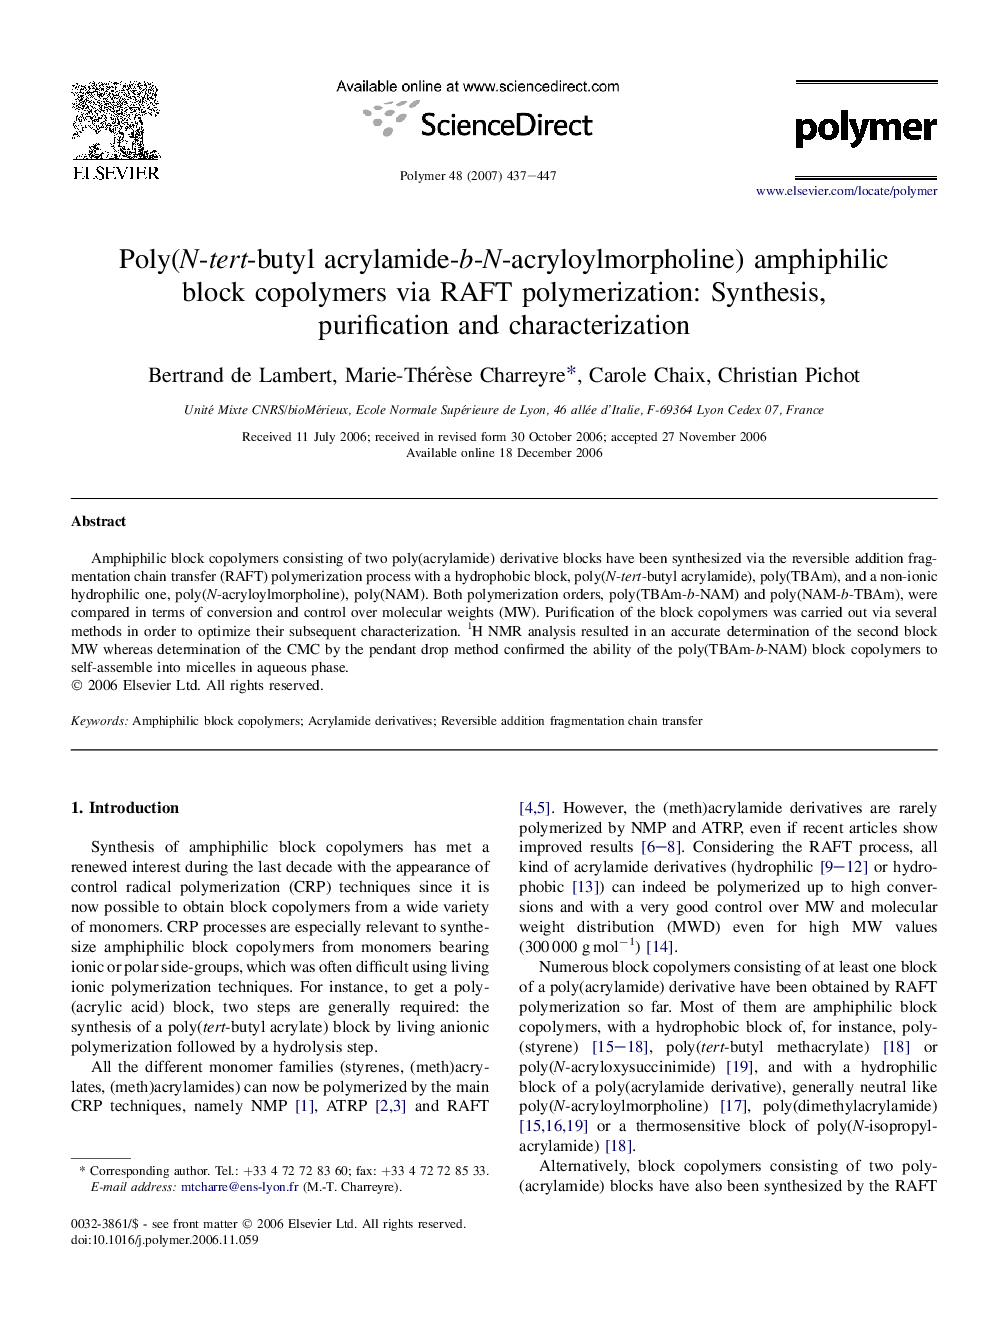 Poly(N-tert-butyl acrylamide-b-N-acryloylmorpholine) amphiphilic block copolymers via RAFT polymerization: Synthesis, purification and characterization